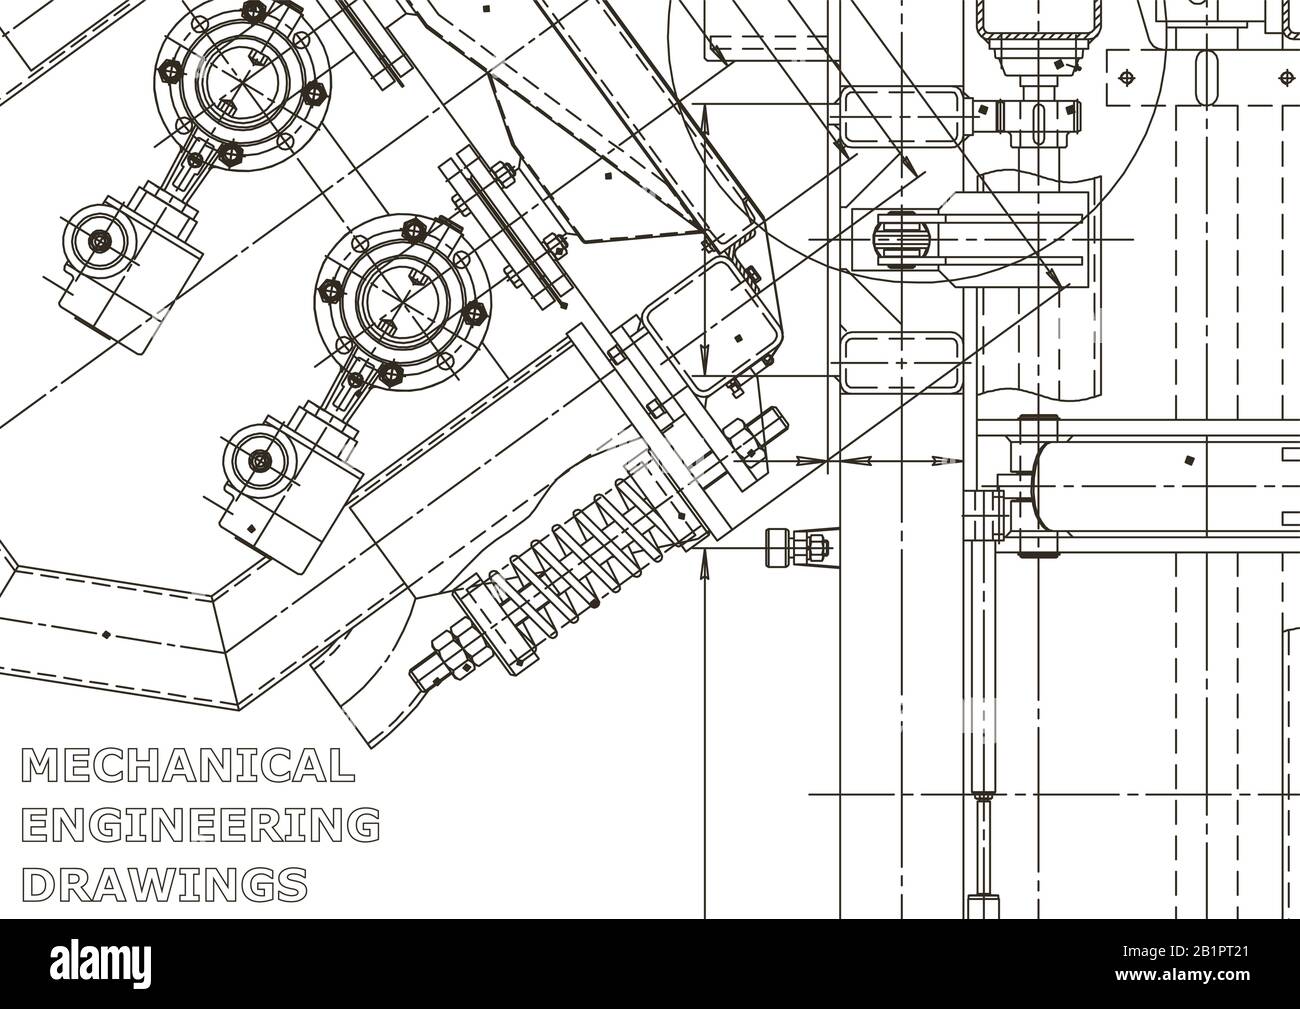 Mechanical Engineering Drawing Car Sale Online - www.illva.com 1695006197